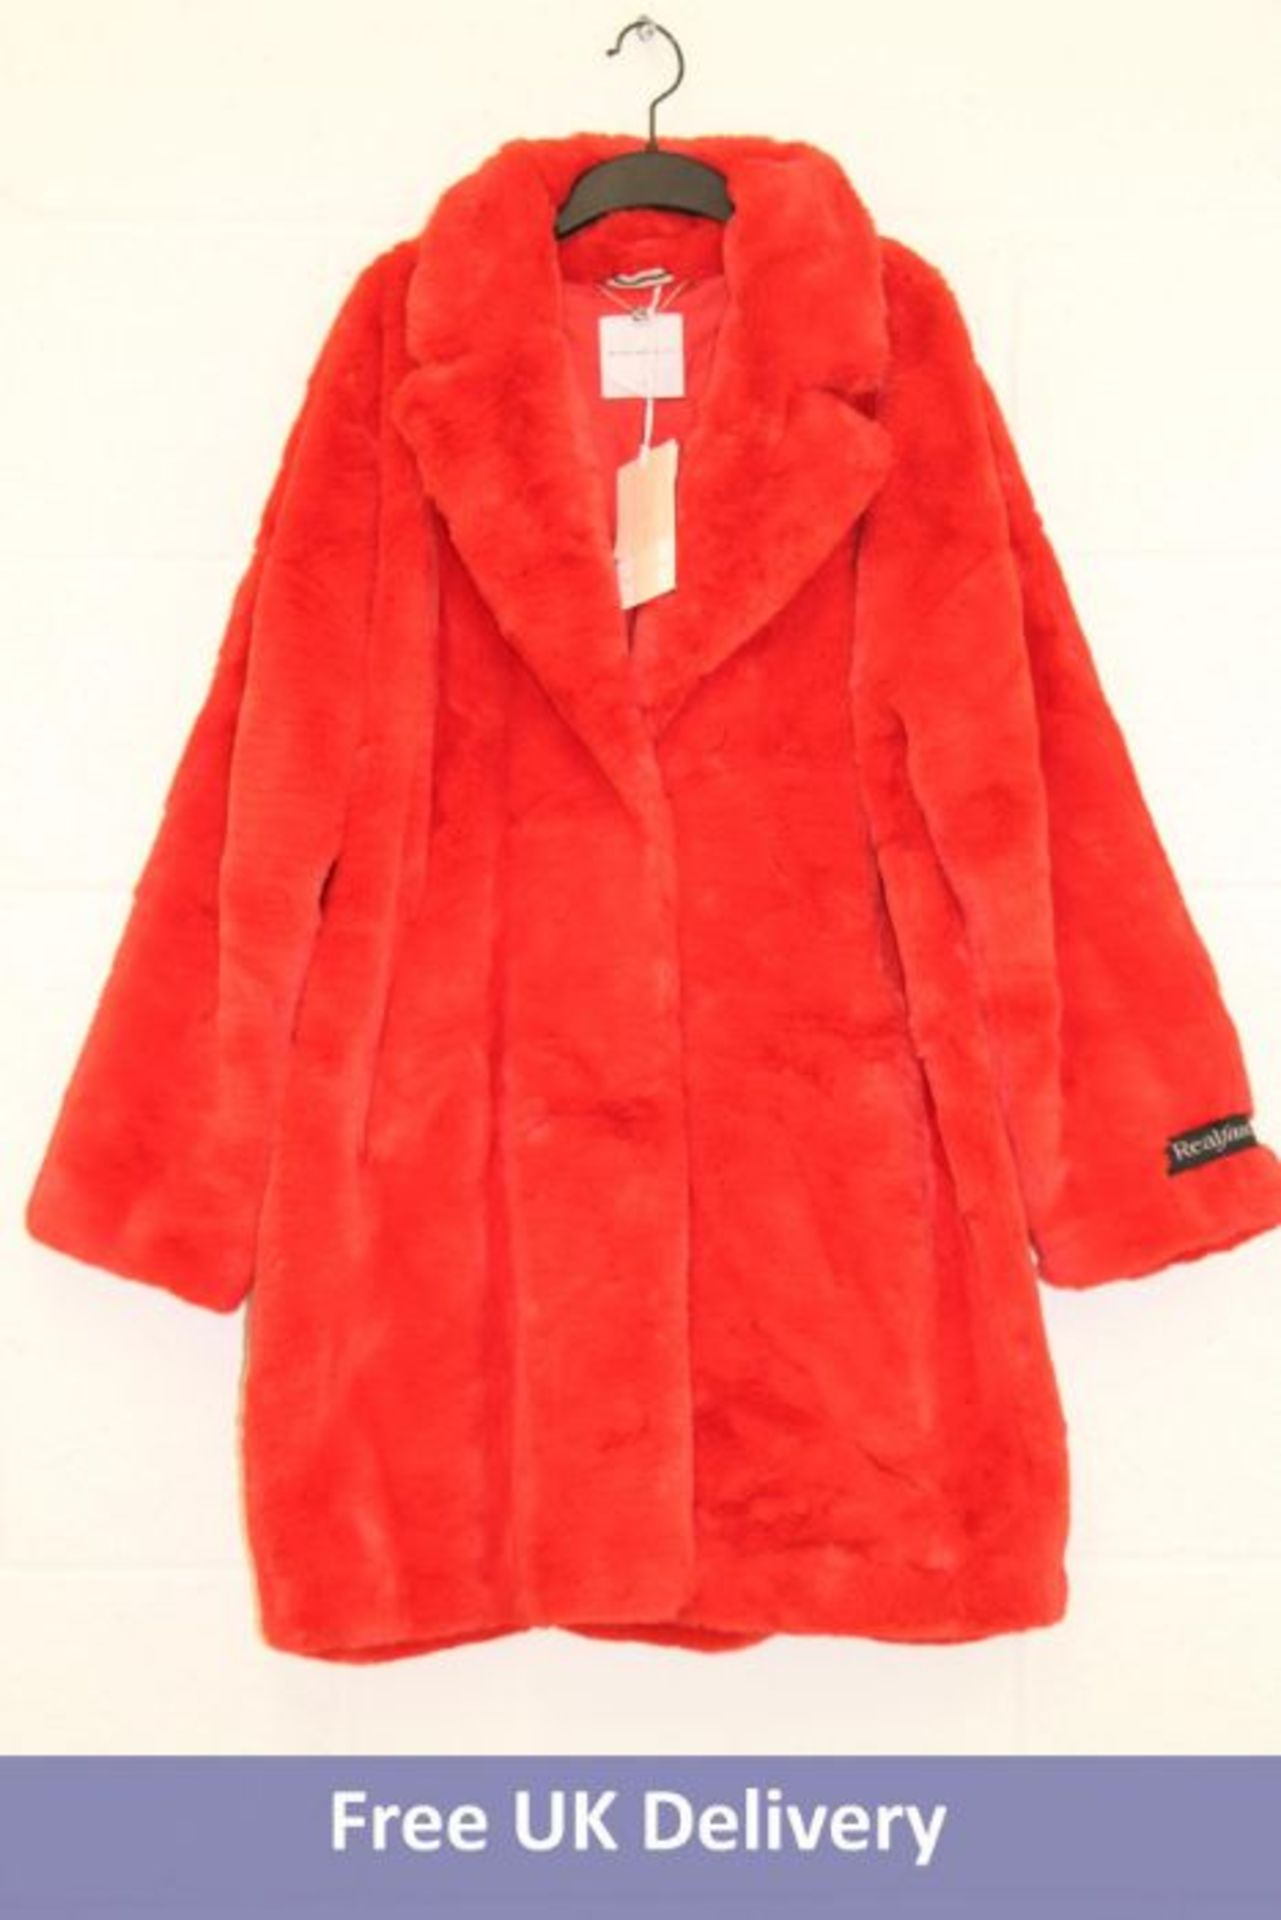 Rino & Pelle Women's Joela Faux Fur Coat, Cherry Tomato, Size 42